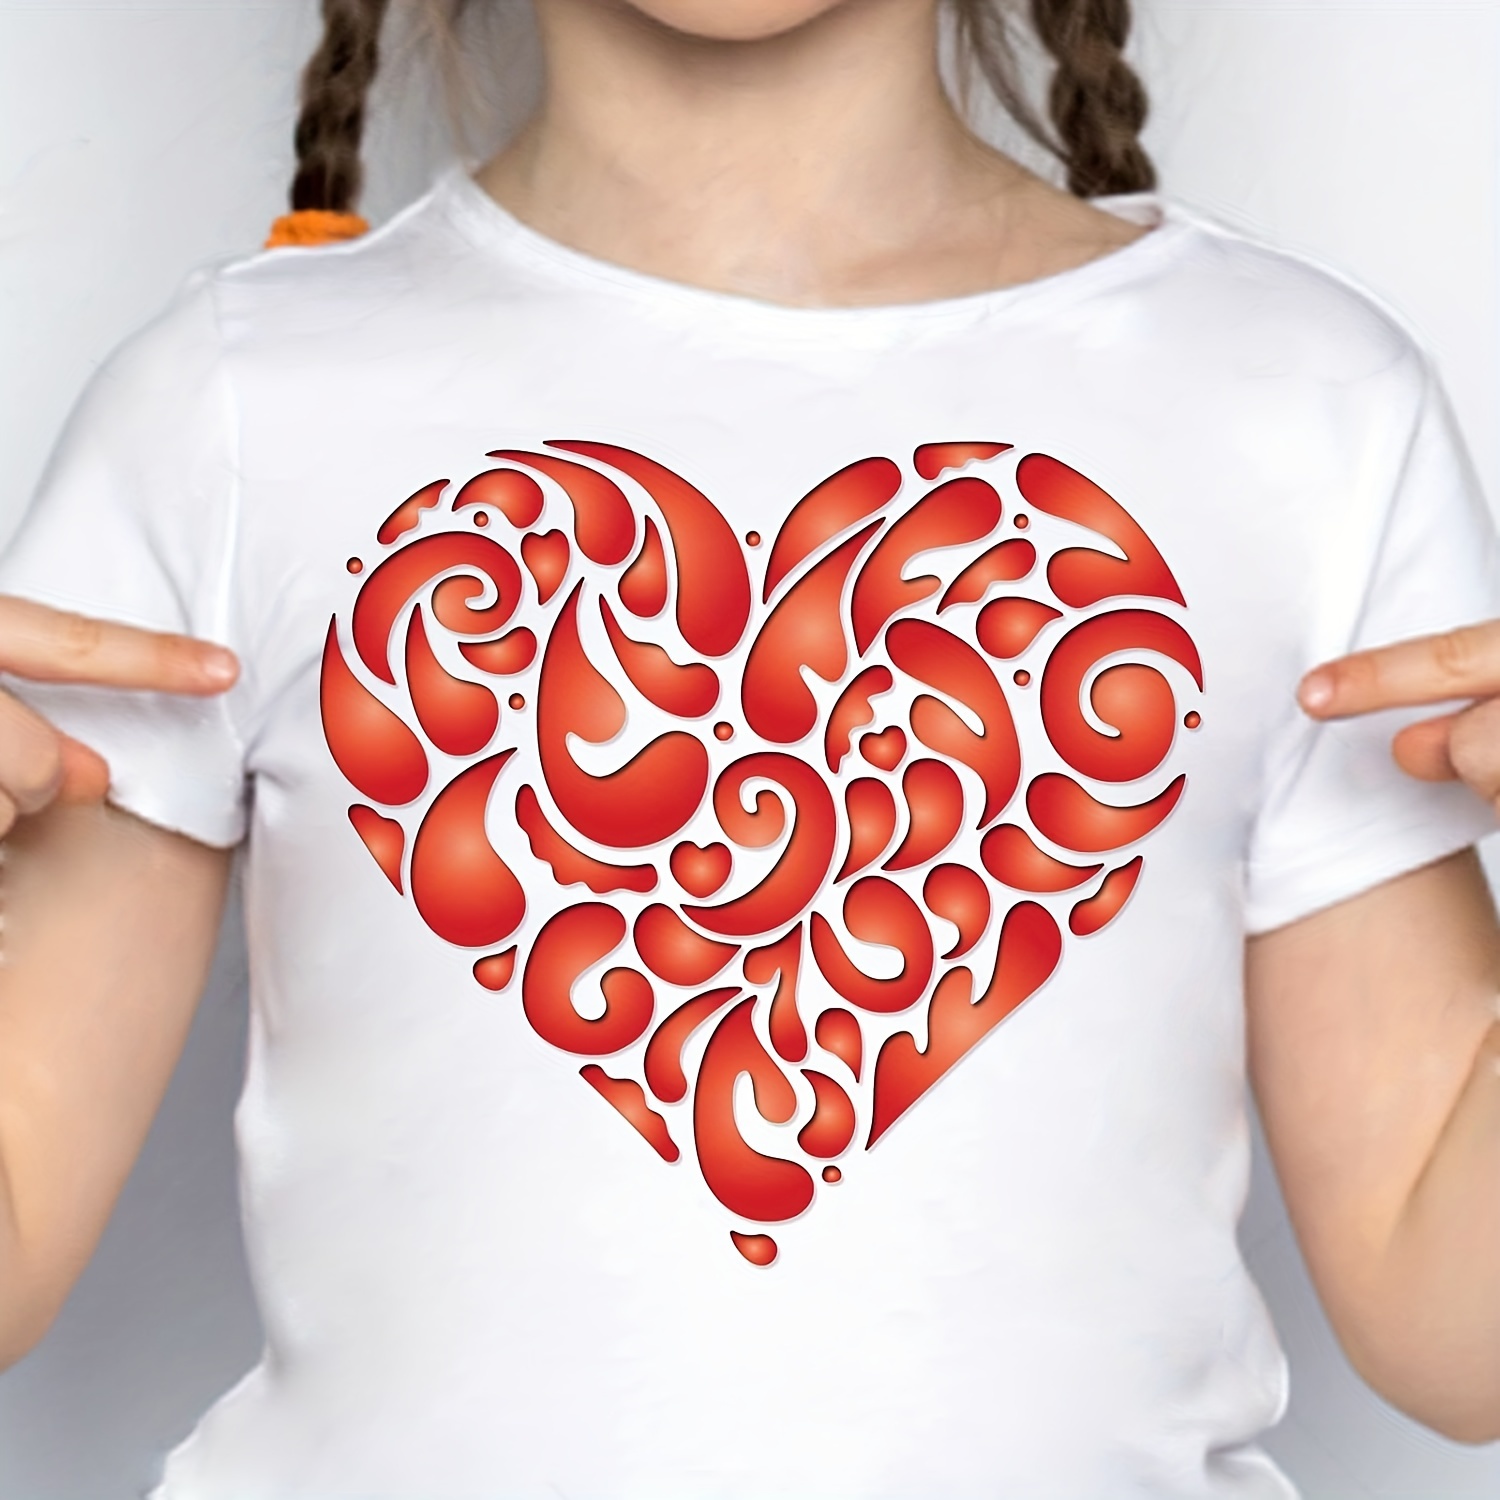 Heart Stencils (about ) Plastic Mandala Heart Painting Stencils